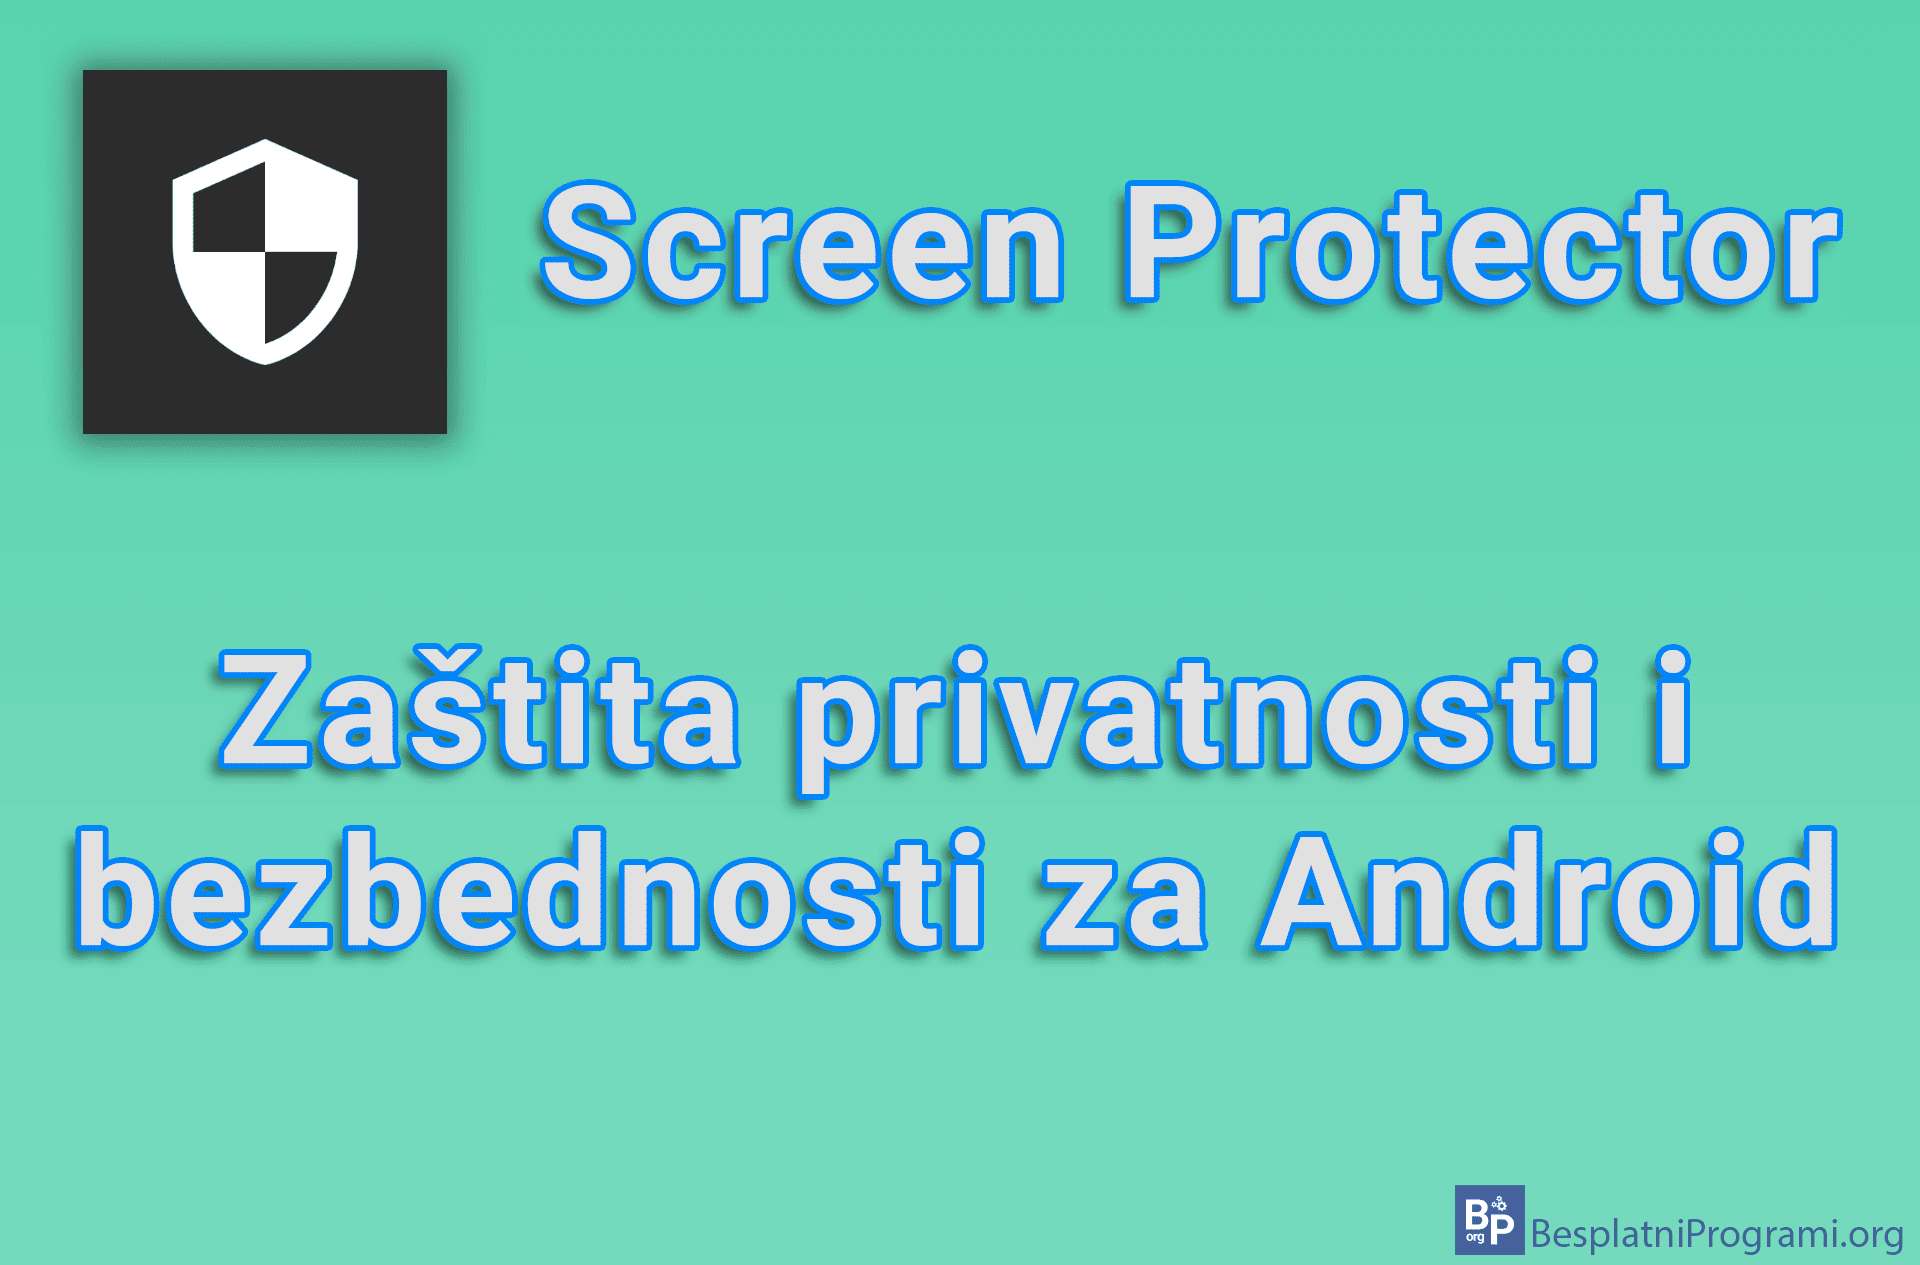 Screen Protector - Zaštita privatnosti i bezbednosti za Android